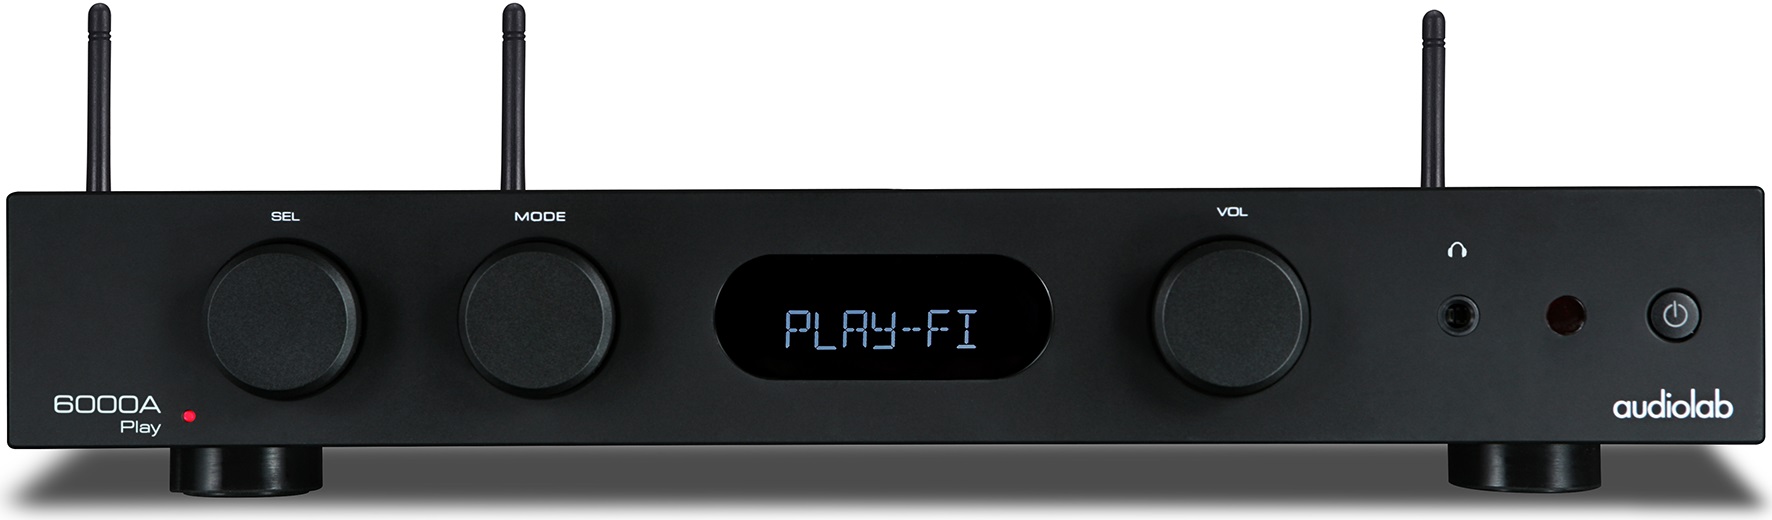 audiolab-6000a-play-integrated-amp-streamer-dac-black